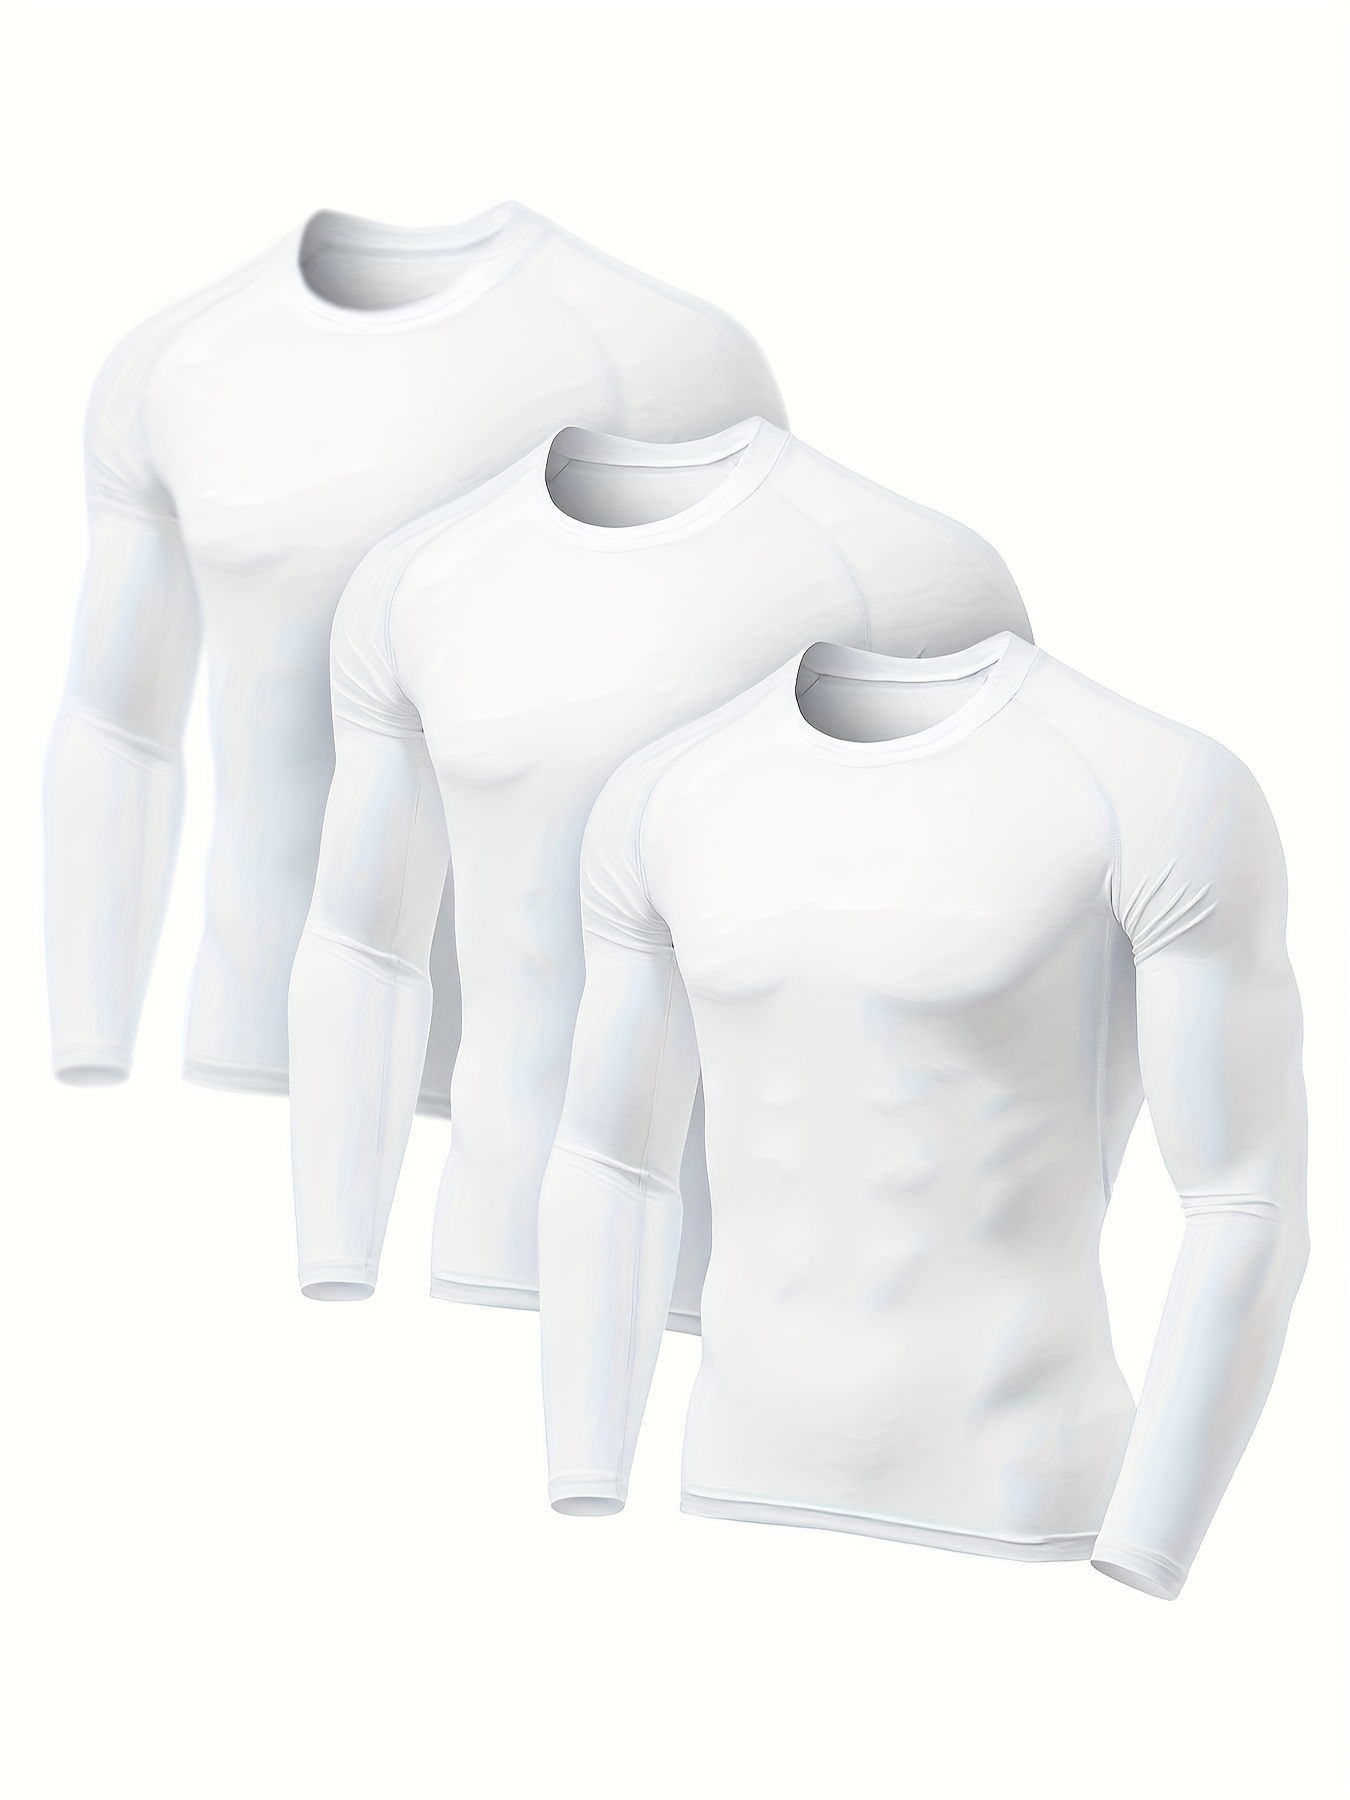 Men Compression Running T Shirt Fitness Tight Long Sleeve Sport